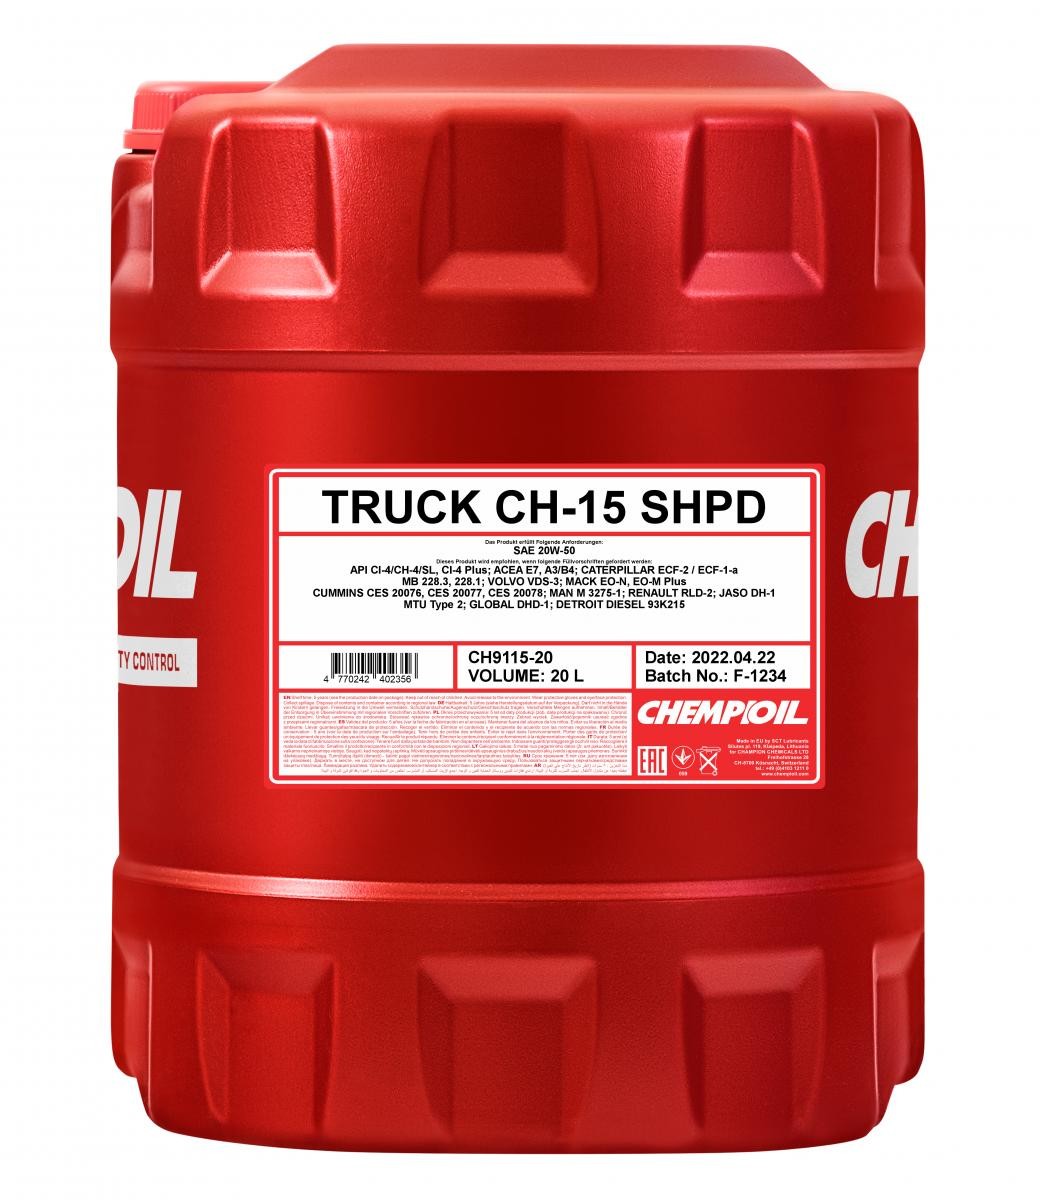 Buy Car oil CHEMPIOIL diesel CH9115-20 Truck, SHPD CH-15 20W-50, 20l